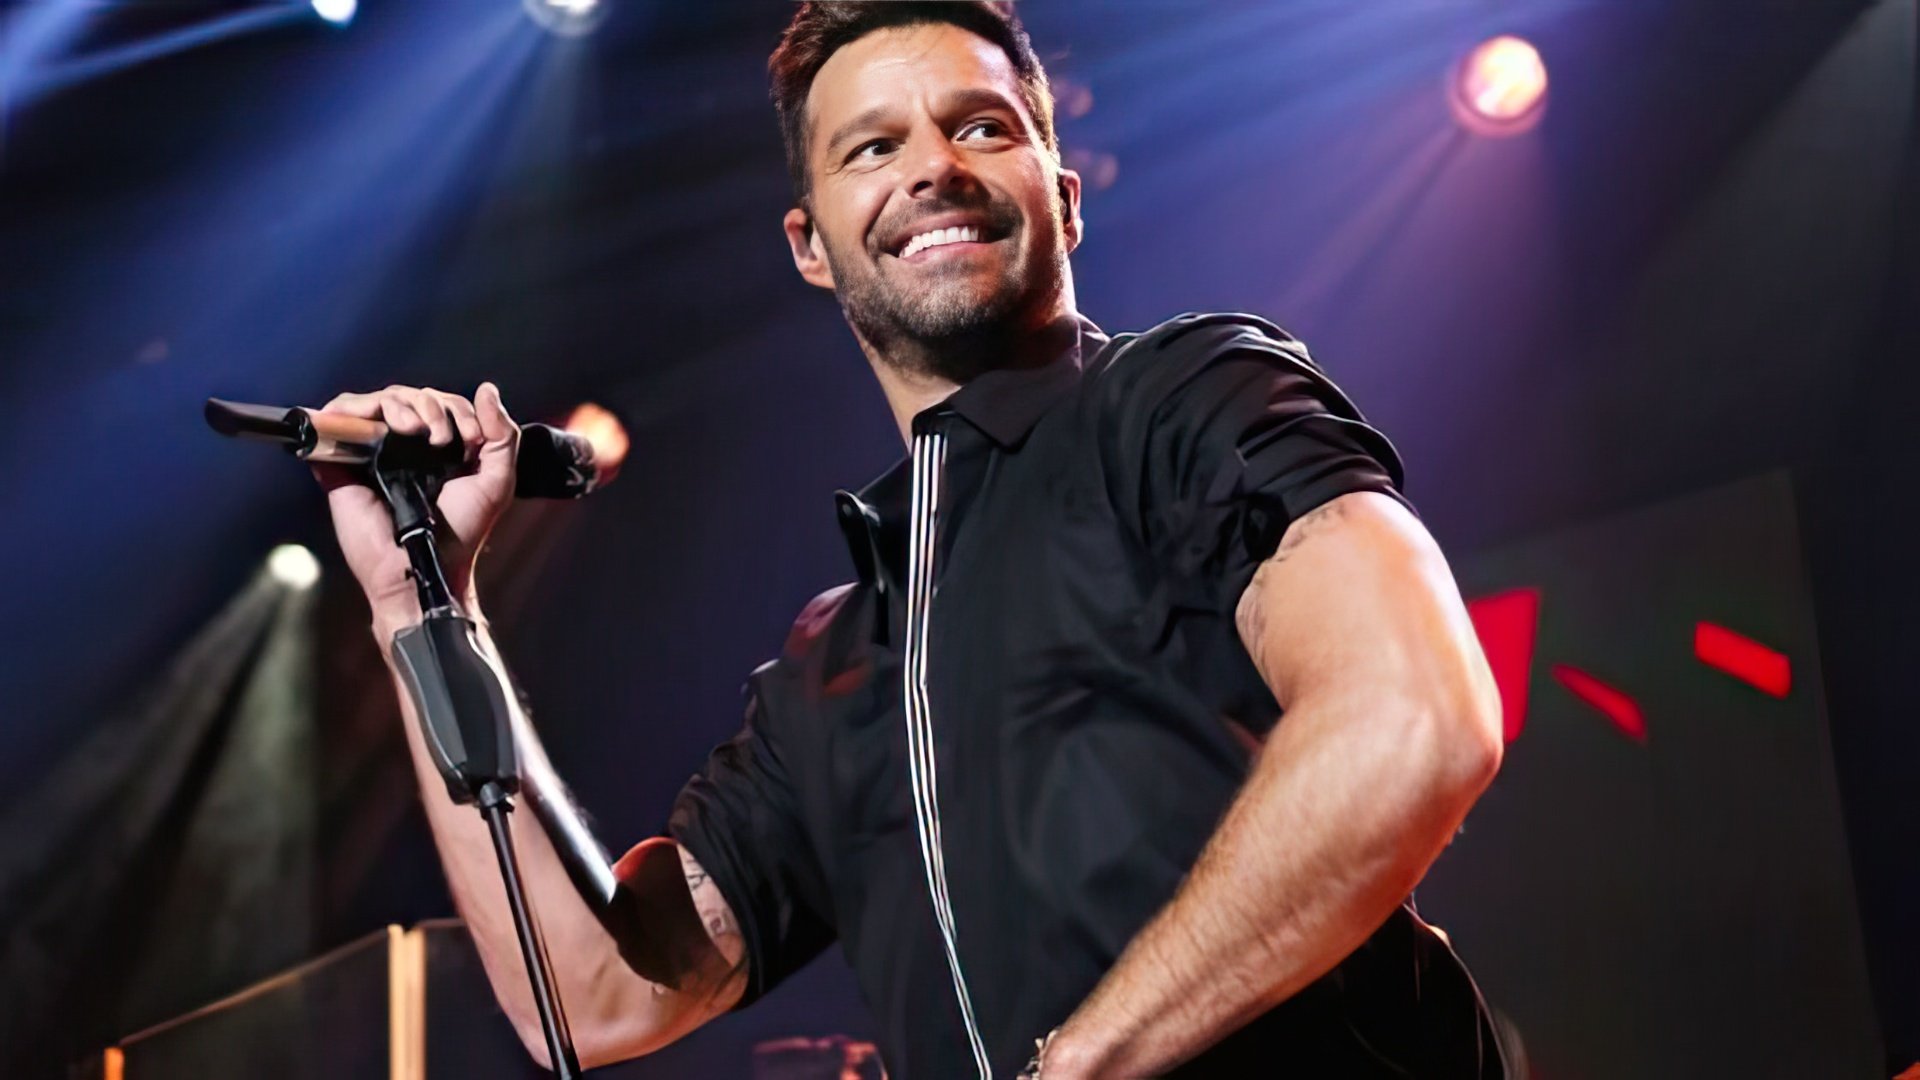 Ricky Martin - Latin pop star